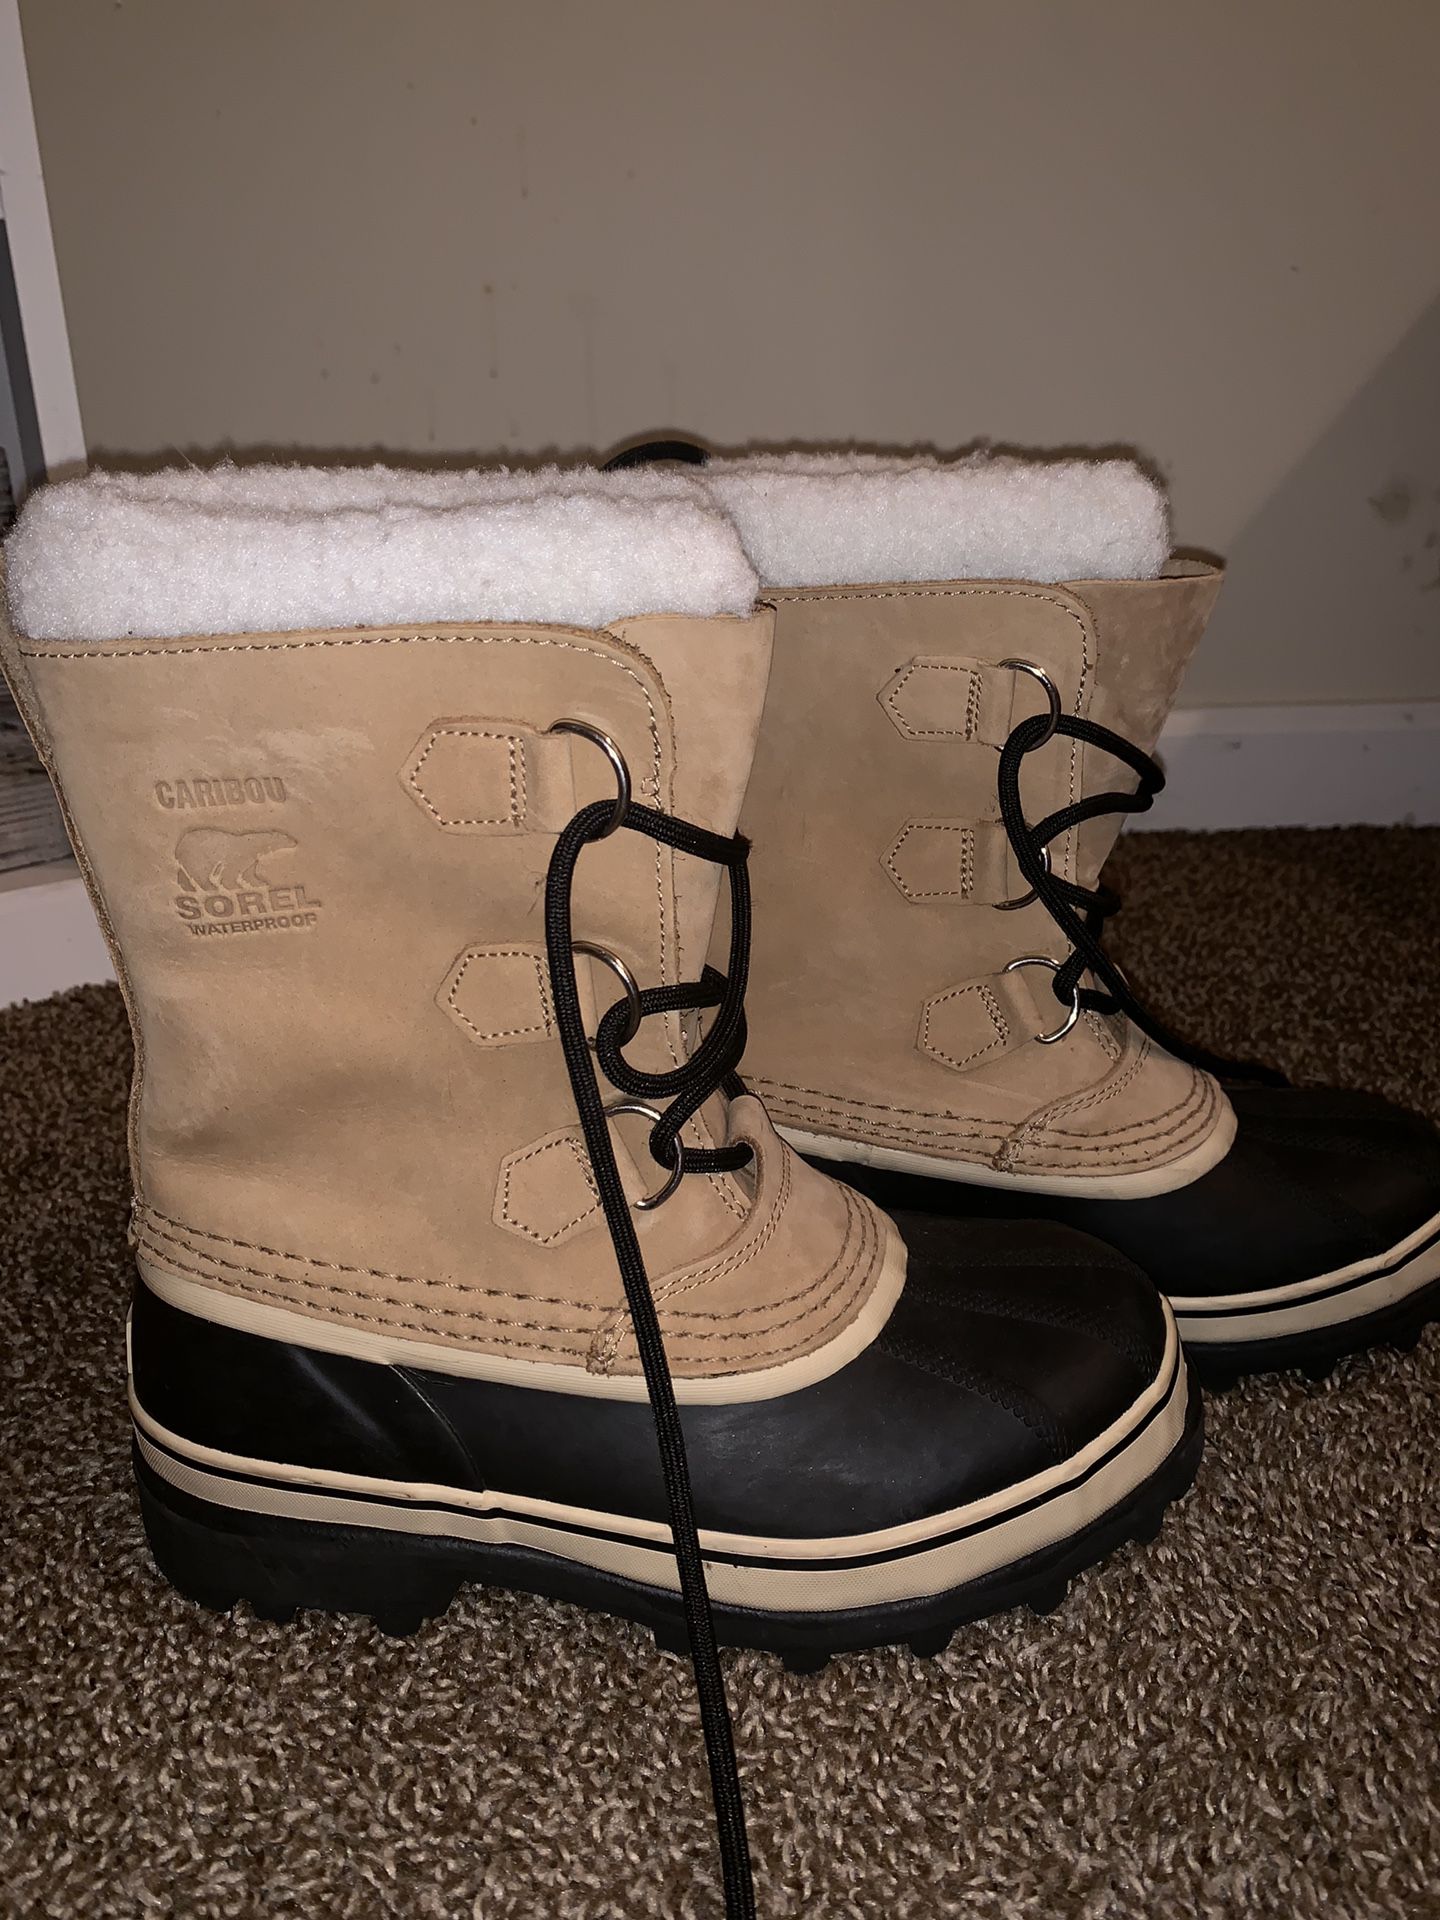 Sorel snow boots size 6